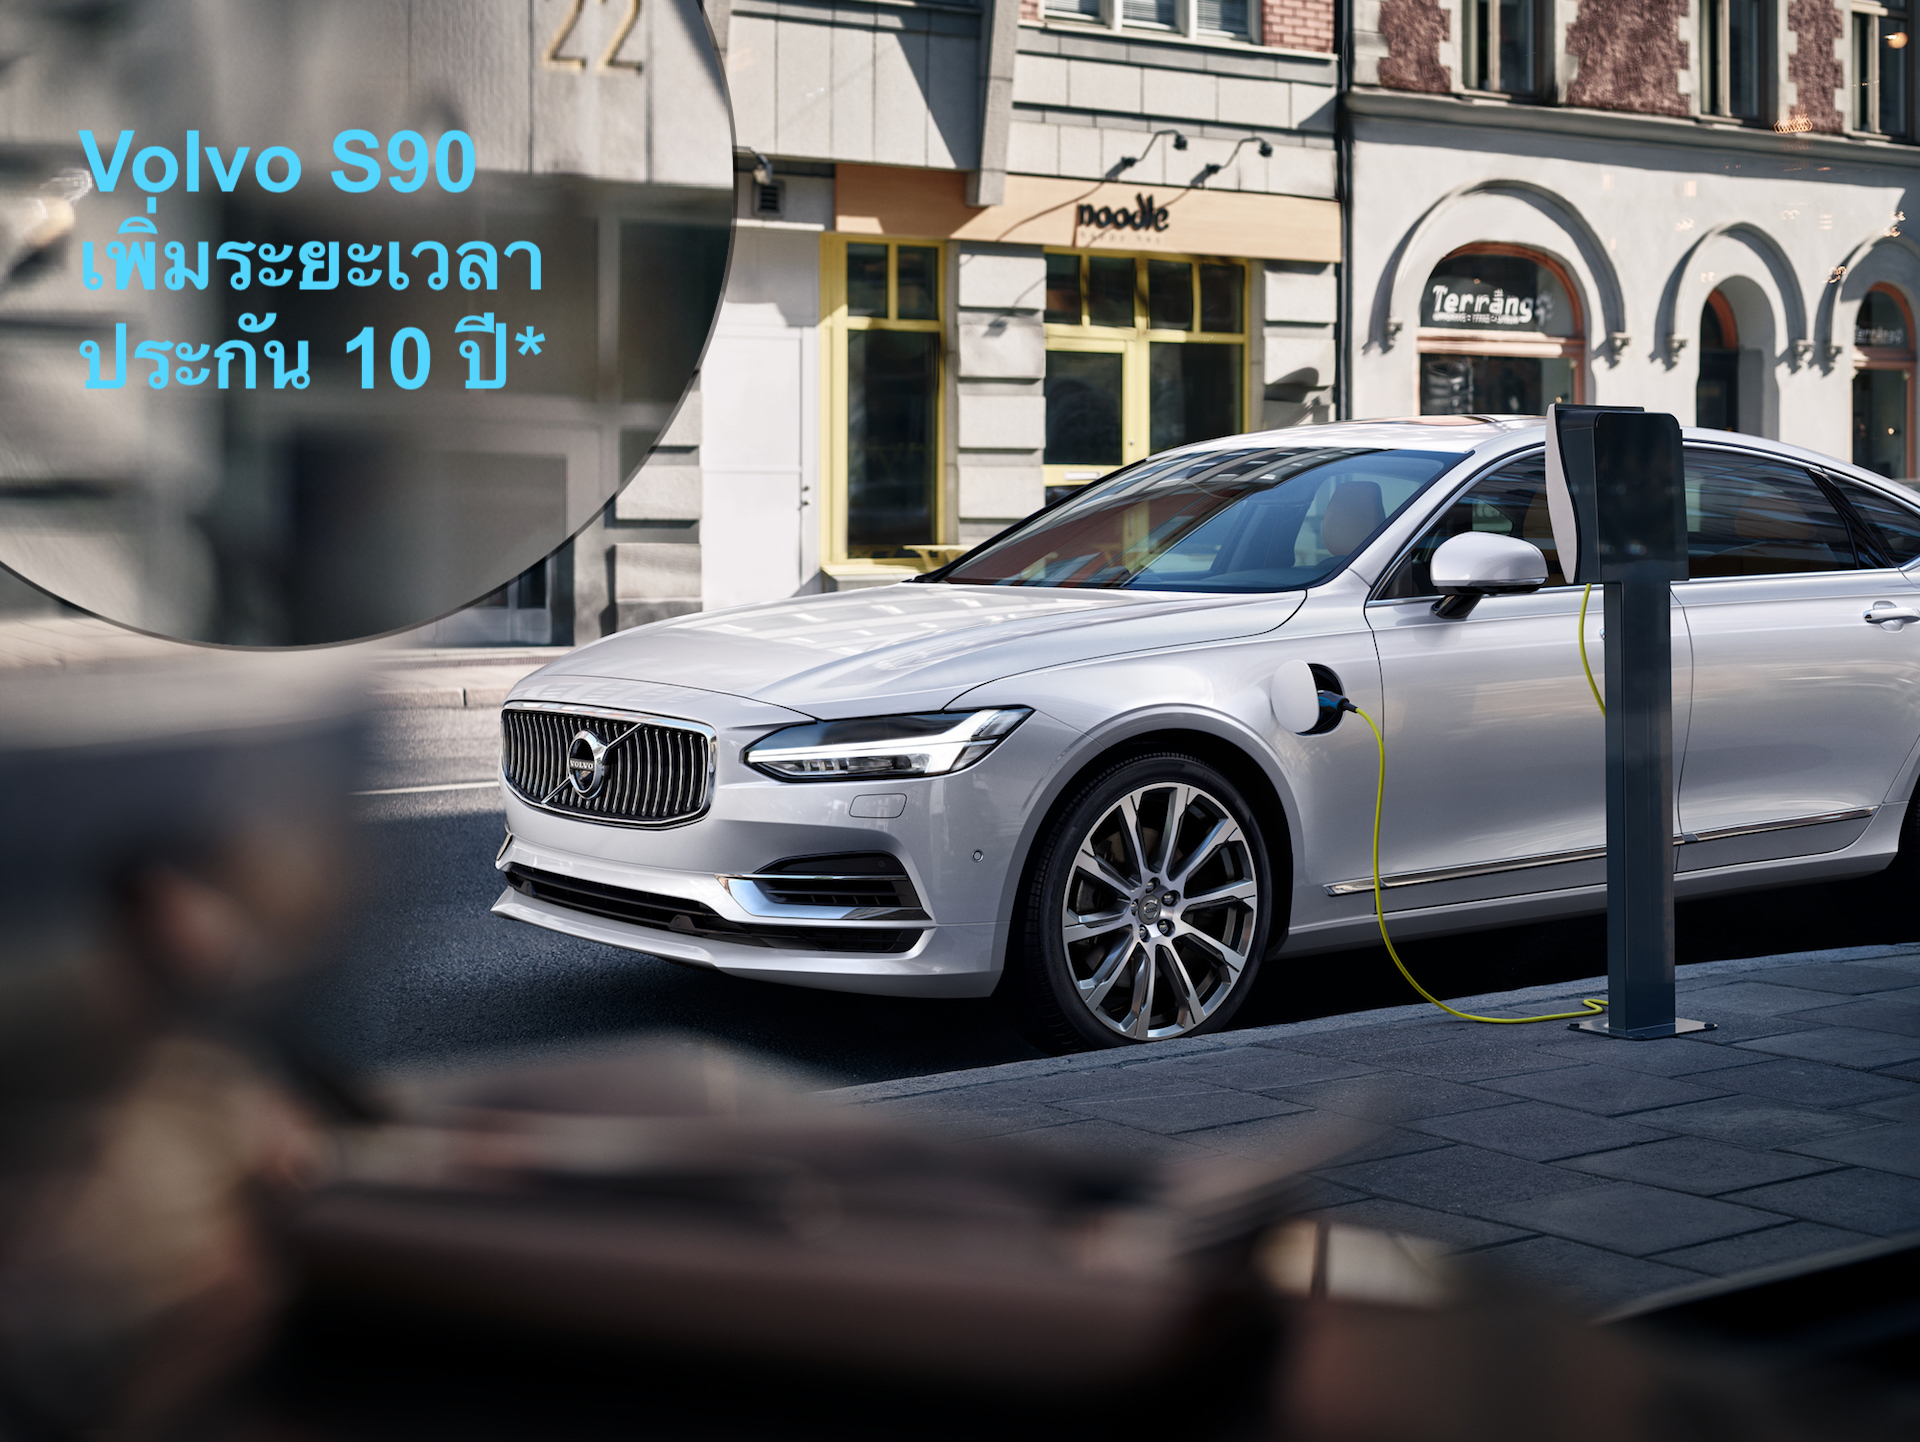 New Volvo S90 Inscription 2019 นิยามใหม่แห่งความหรูหราสไตล์สแกนดิเนเวียนขนานแท้ เพิ่มระยะเวลาประกันสองเท่าจากเดิม 5 ปี นานเป็น 10 ปี*